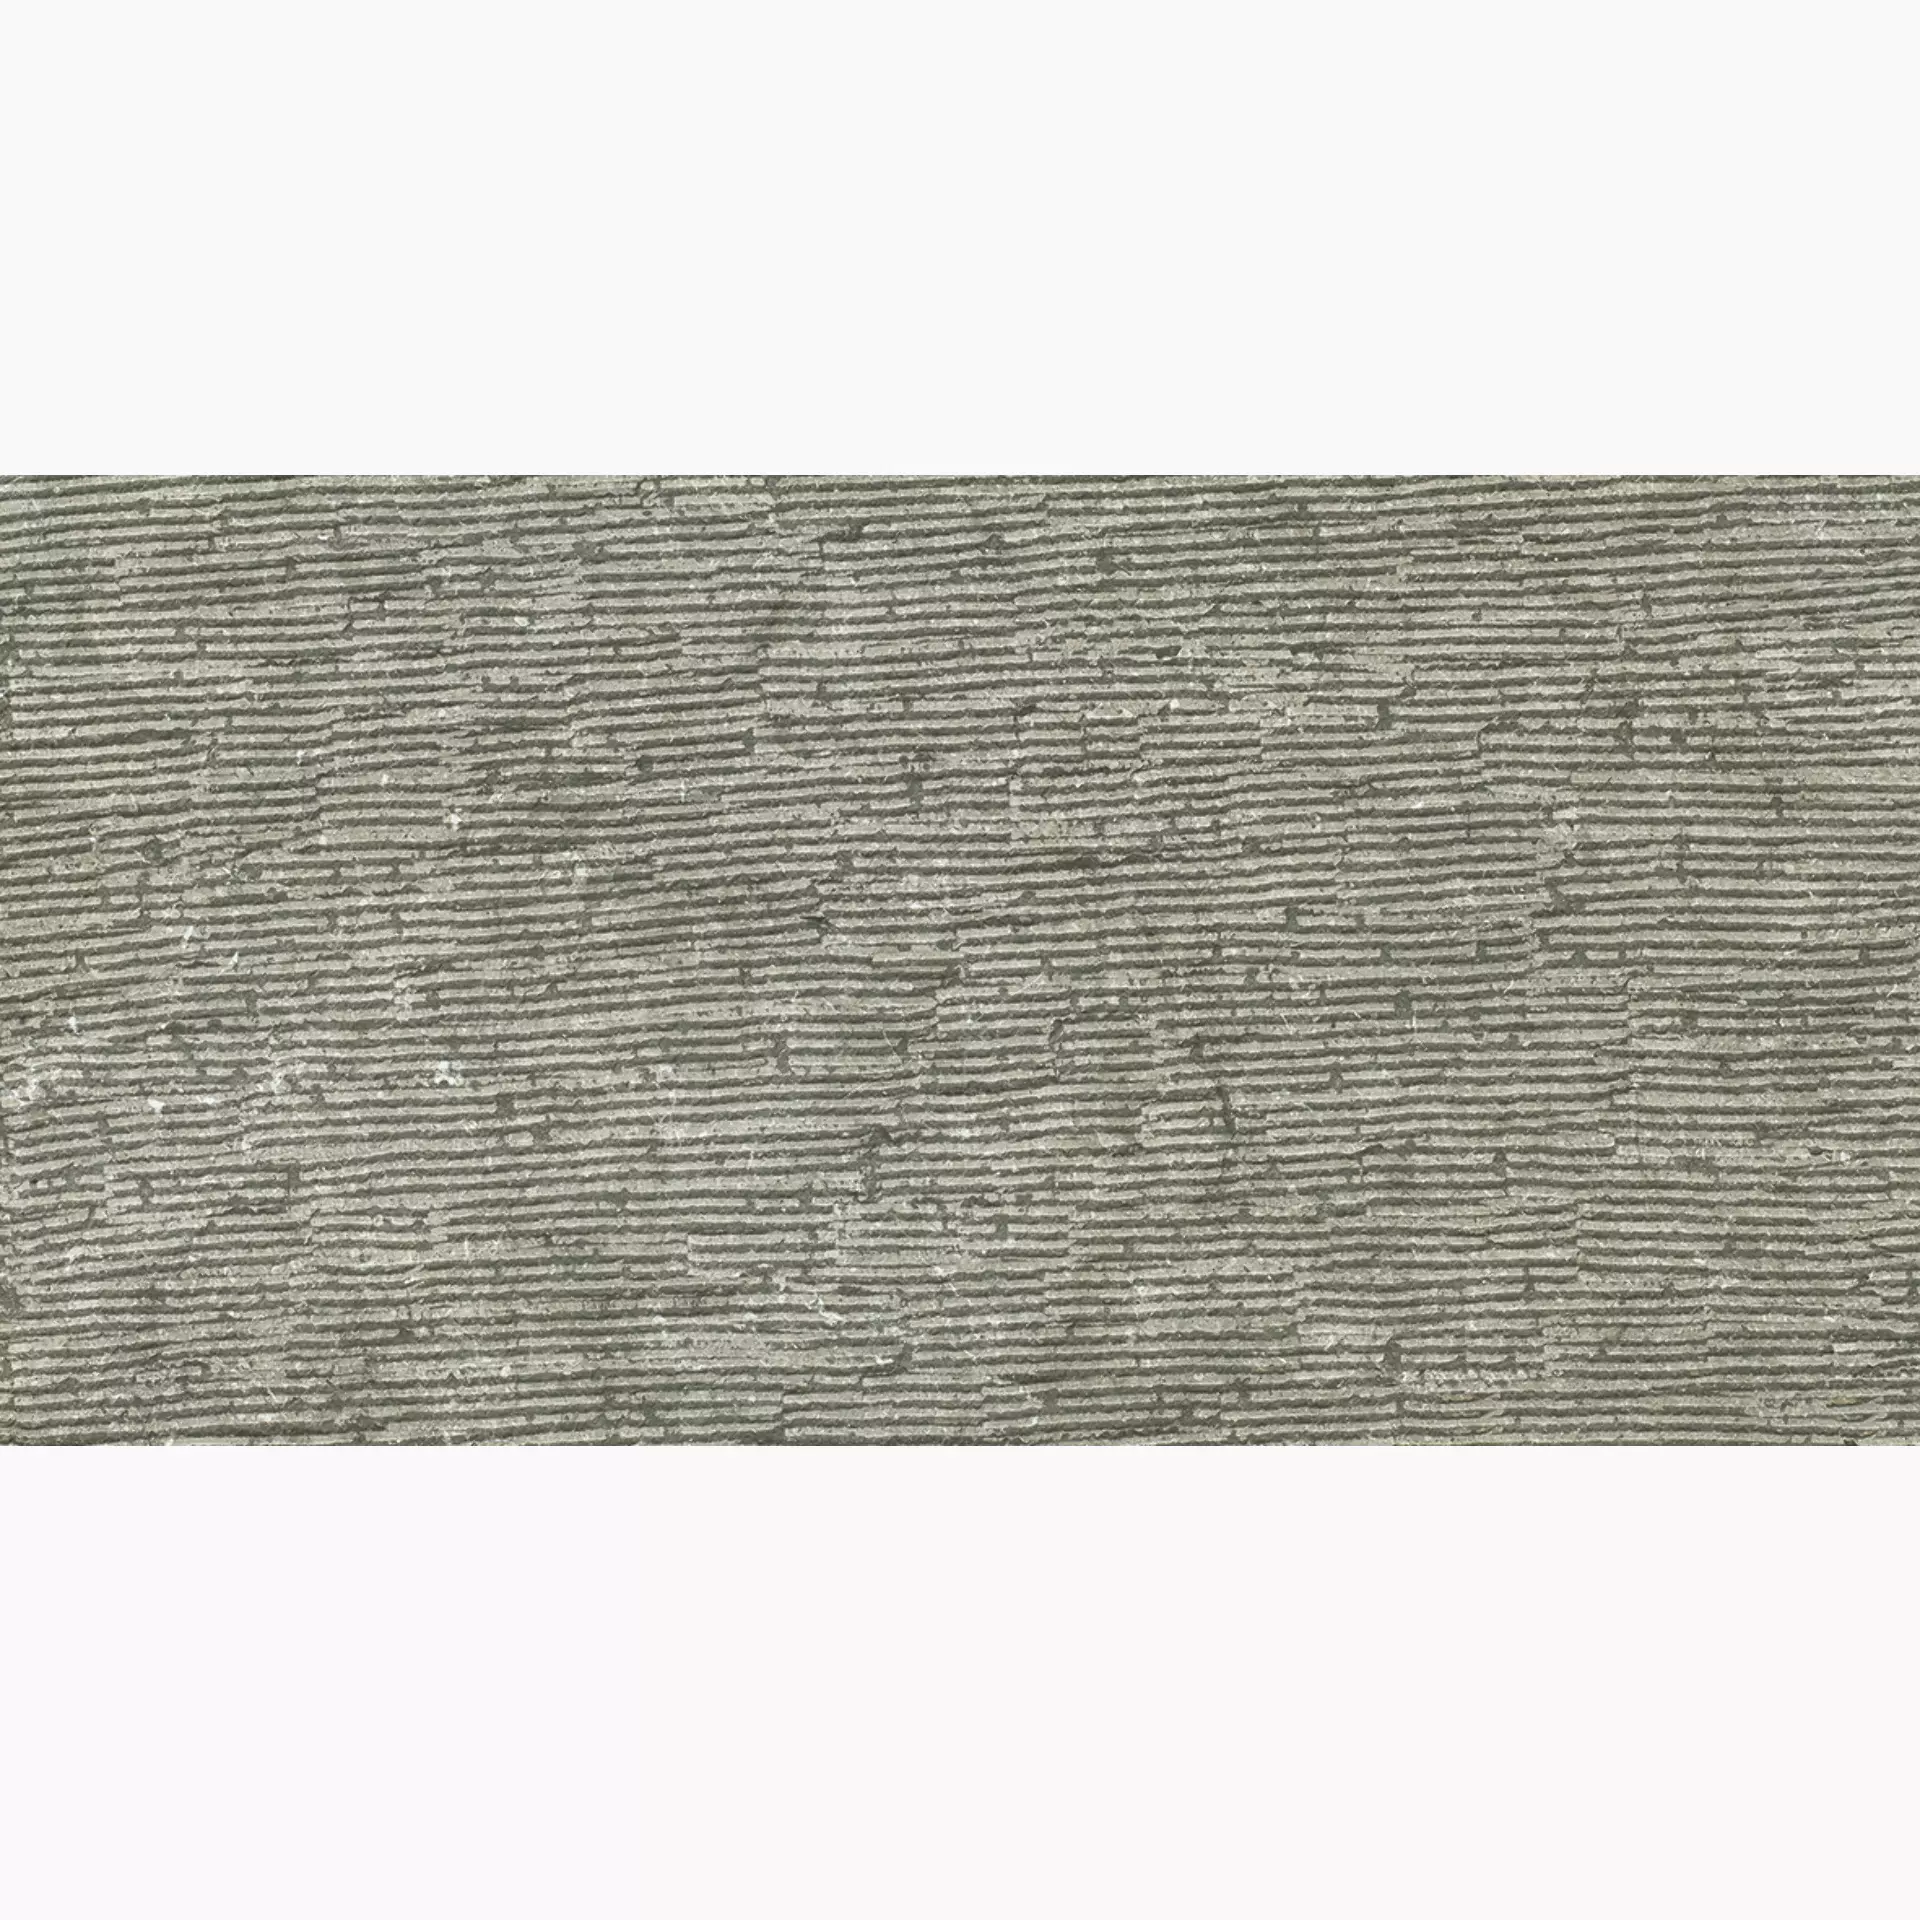 Ergon Stone Talk Rullata Taupe Naturale ED57 30x60cm rectified 9,5mm